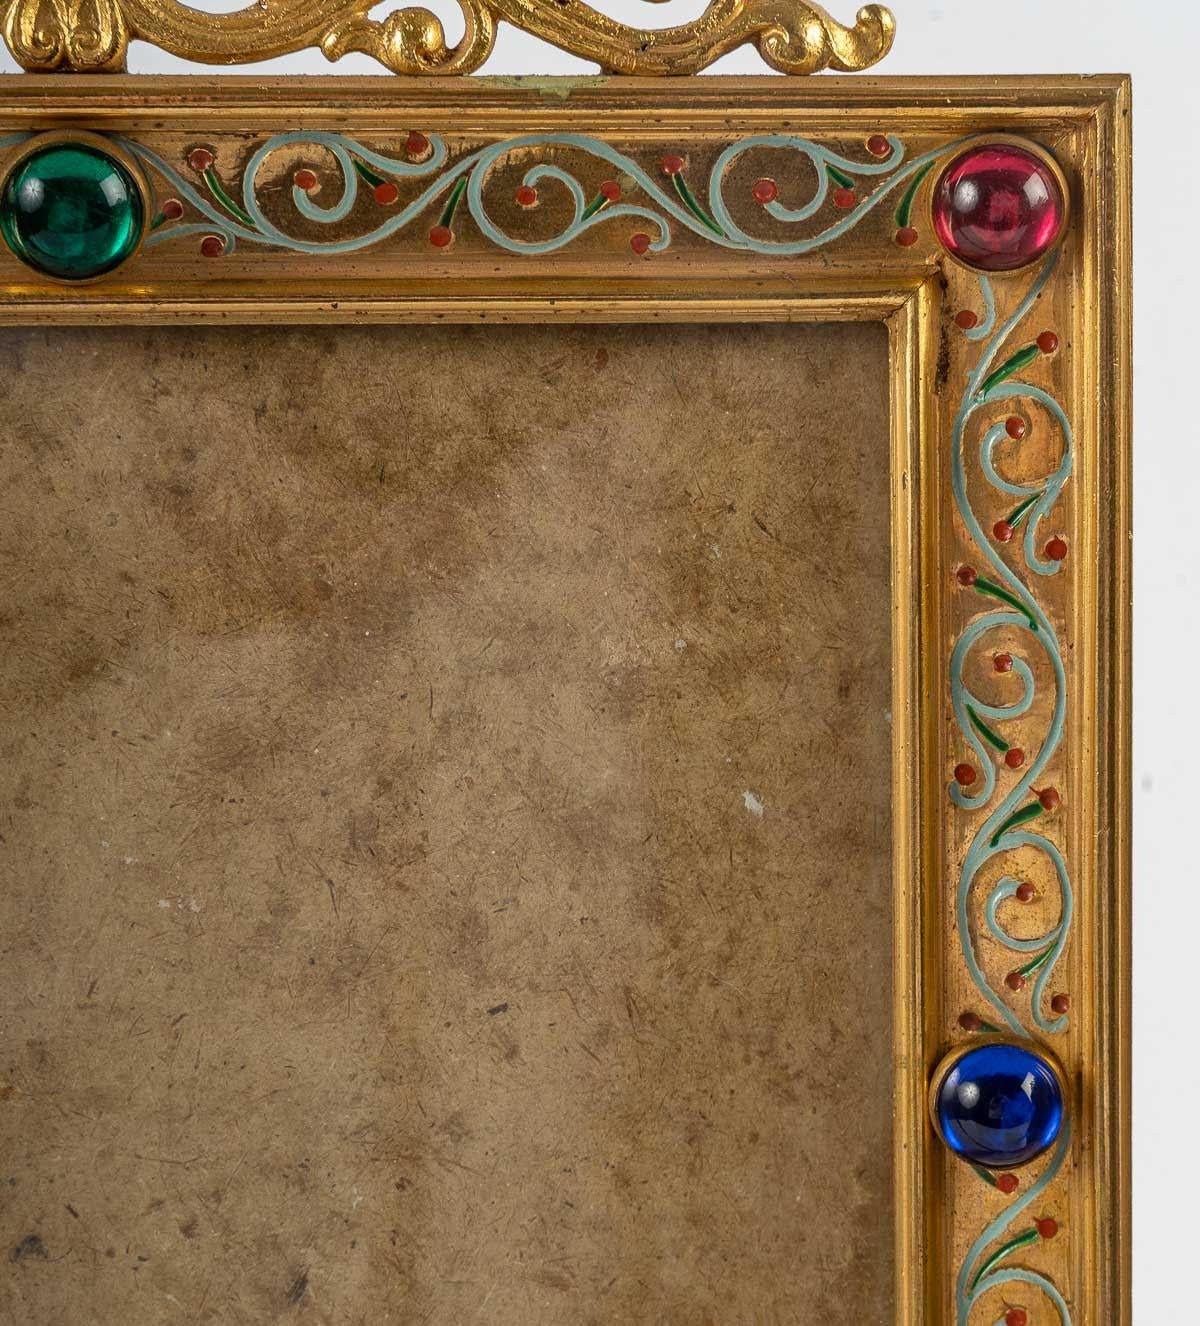 Suite of 2 photo frames, gilt bronze with coloured glass cabochons, 19th century, Napoleon III period, on bronze castors on the base.
Measures: H: 38.5 cm, W: 21 cm, D: 8 cm.